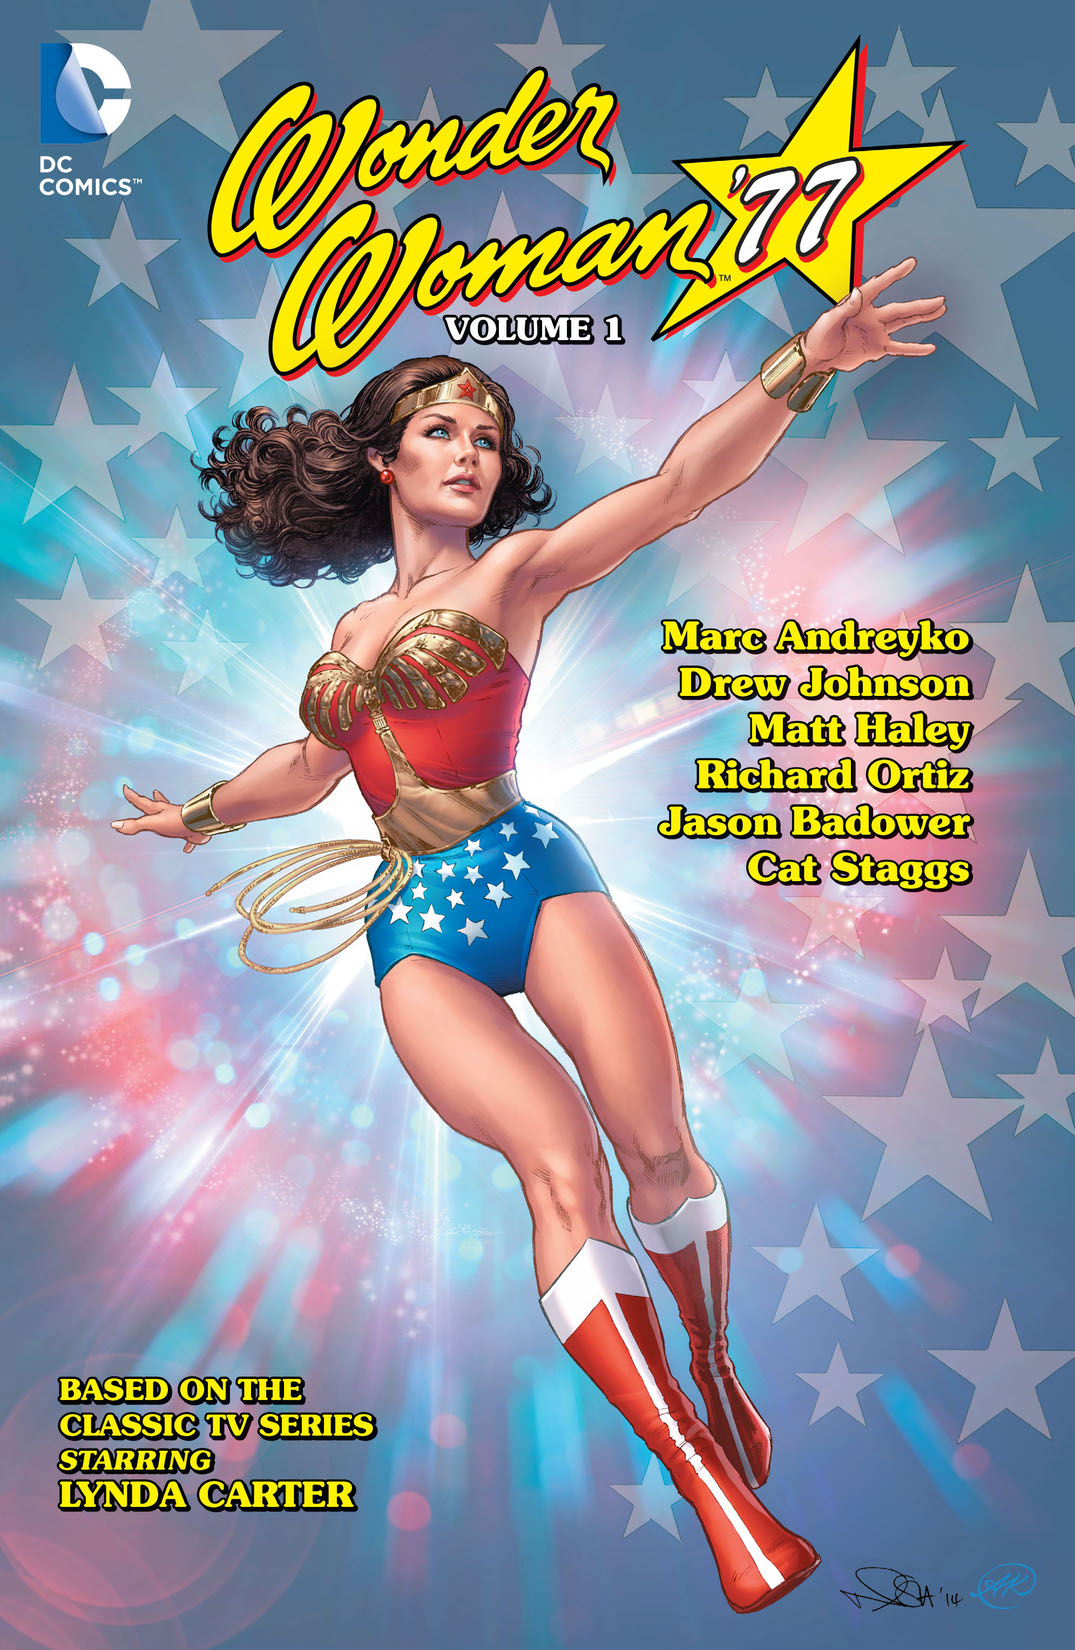 Wonder Woman '77 Vol. 1 preview images